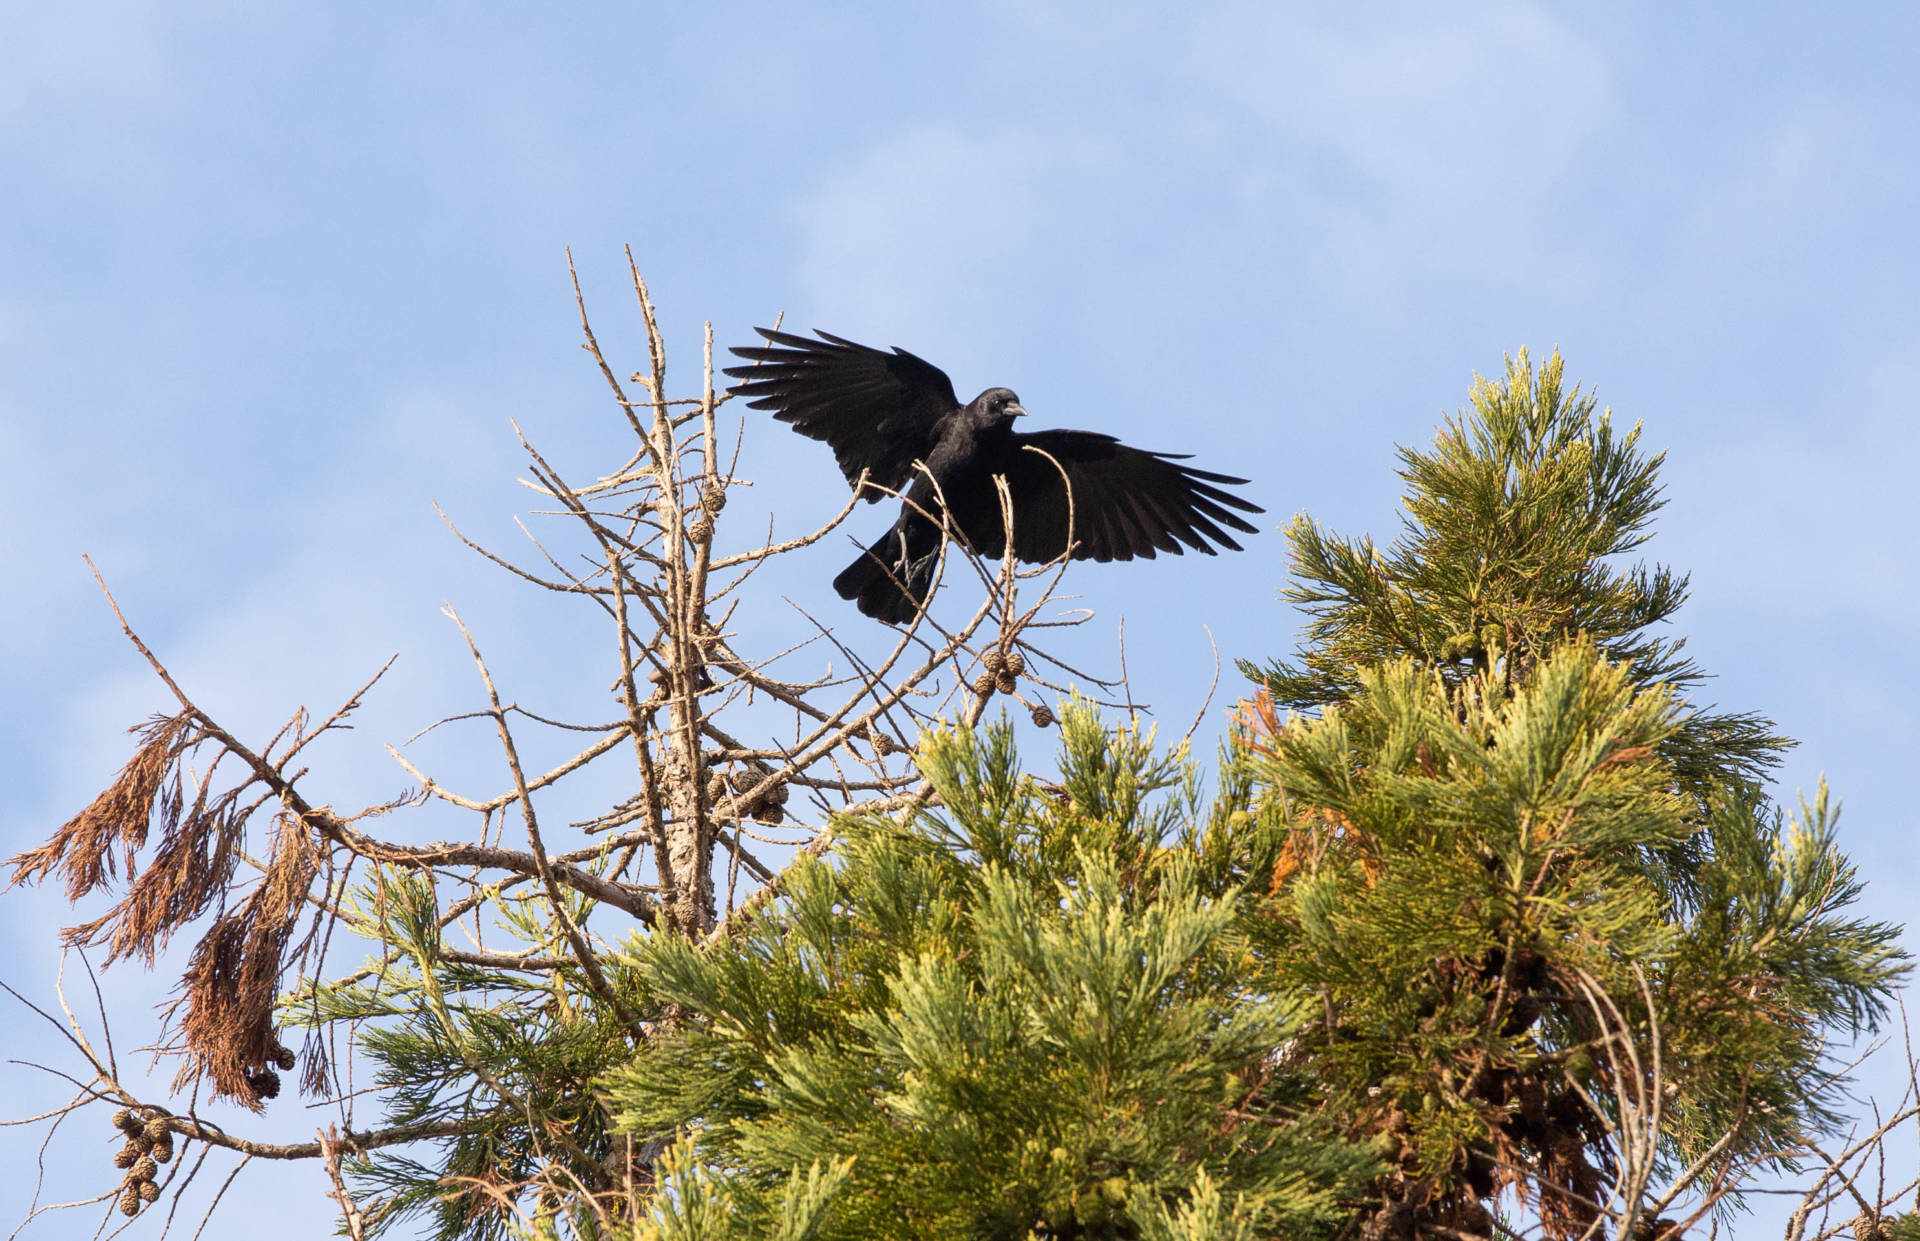 Corvus brachyrhynchos, better known as the common crow, as pictured in a Berkeley backyard.  Dan Brekke/KQED